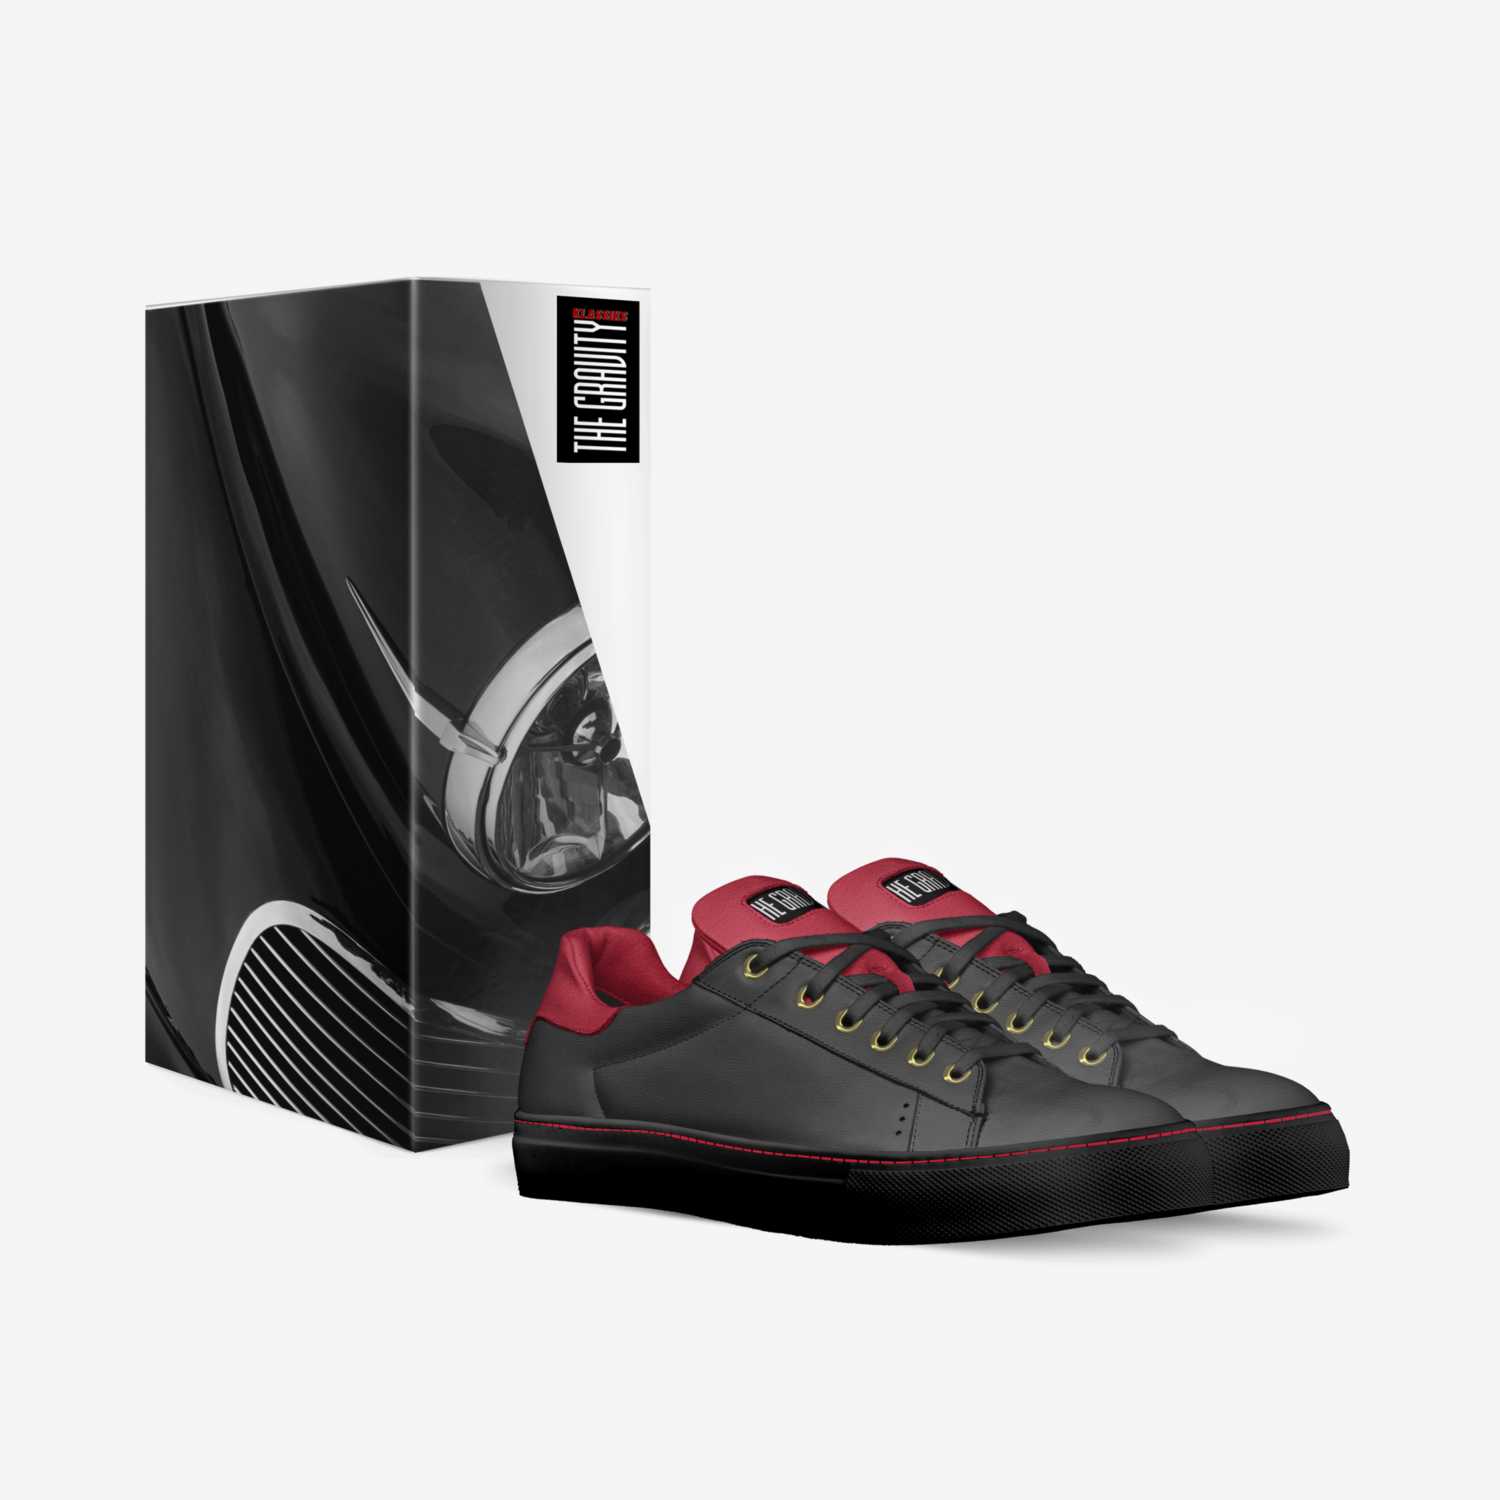 Gravity Klassik custom made in Italy shoes by Ita Akpan-ita | Box view